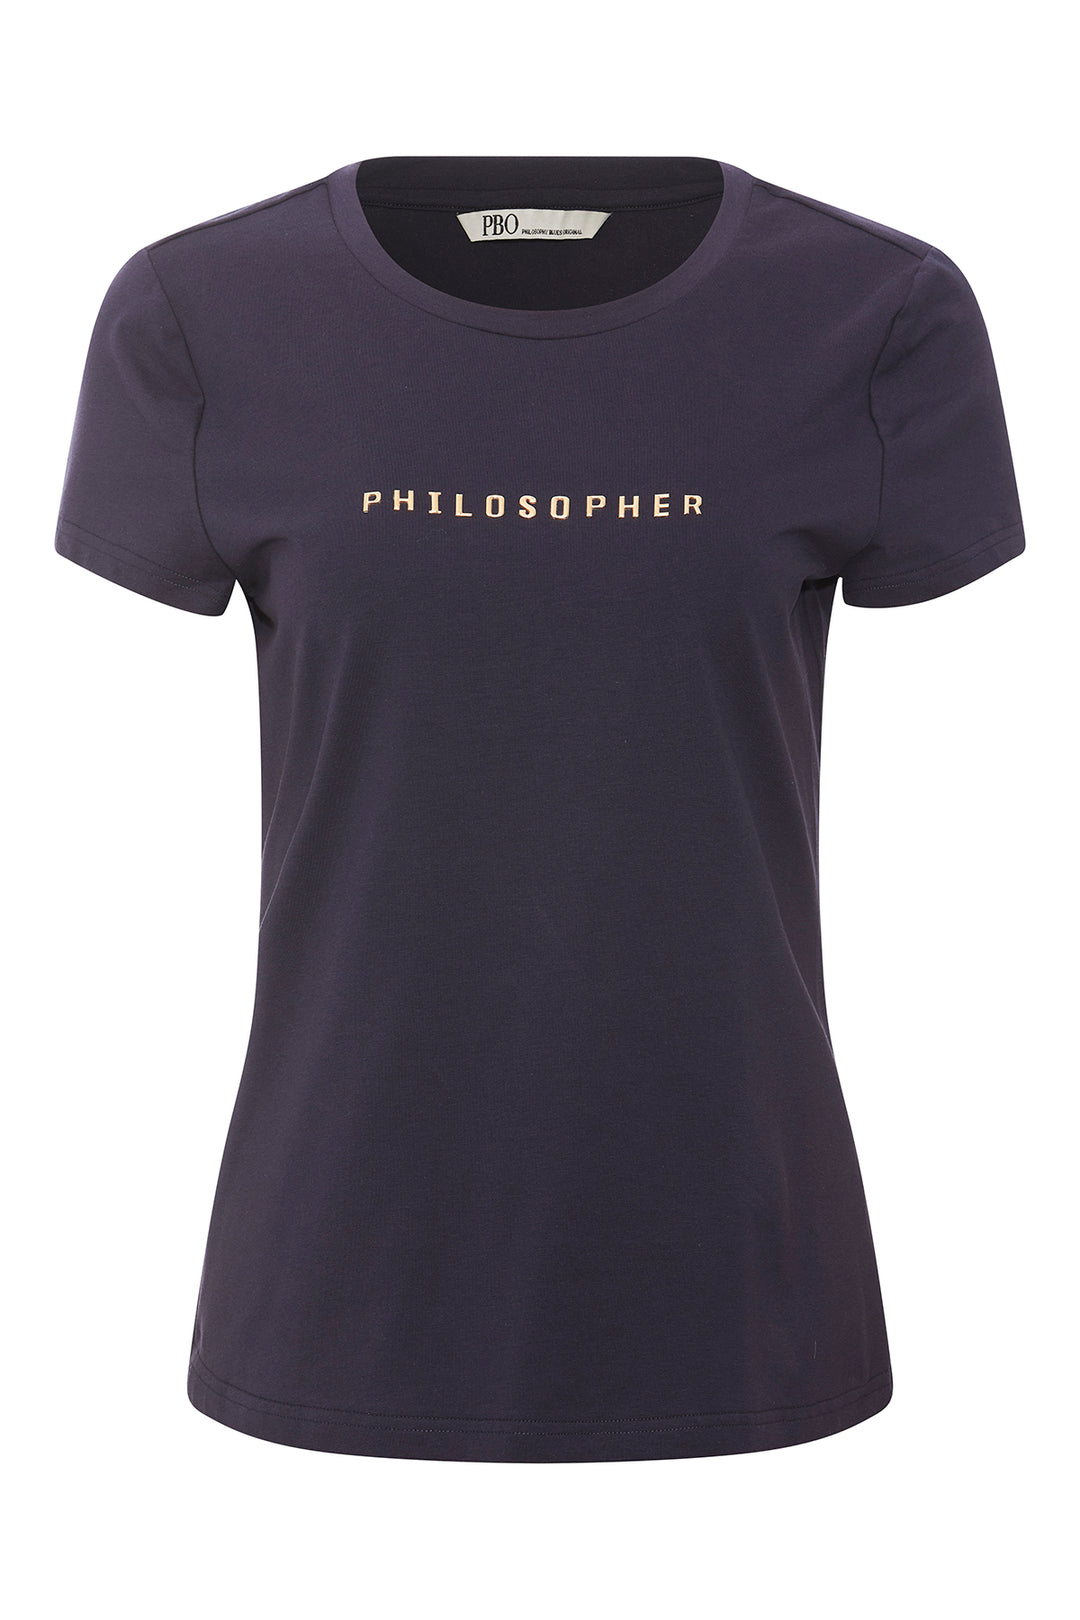 PBO Philosopher T-shirt T-SHIRTS 250 Midnight